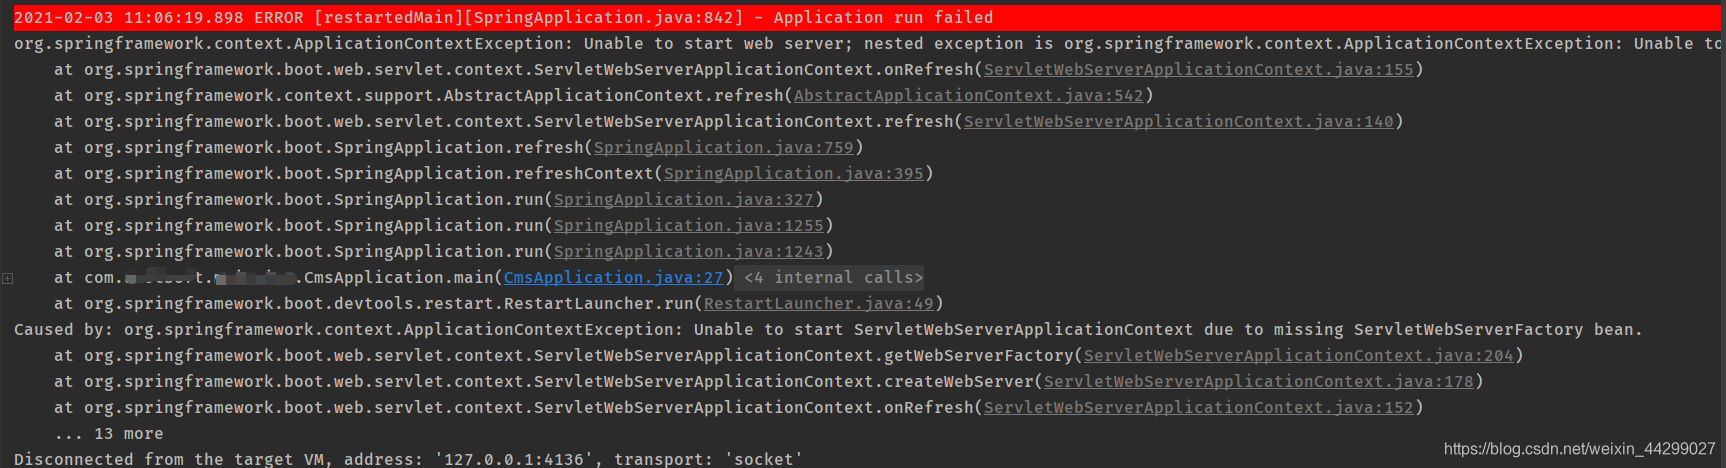 【Java】Unable to start ServletWebServerApplicationContext due to missing ServletWebServerFactory bean